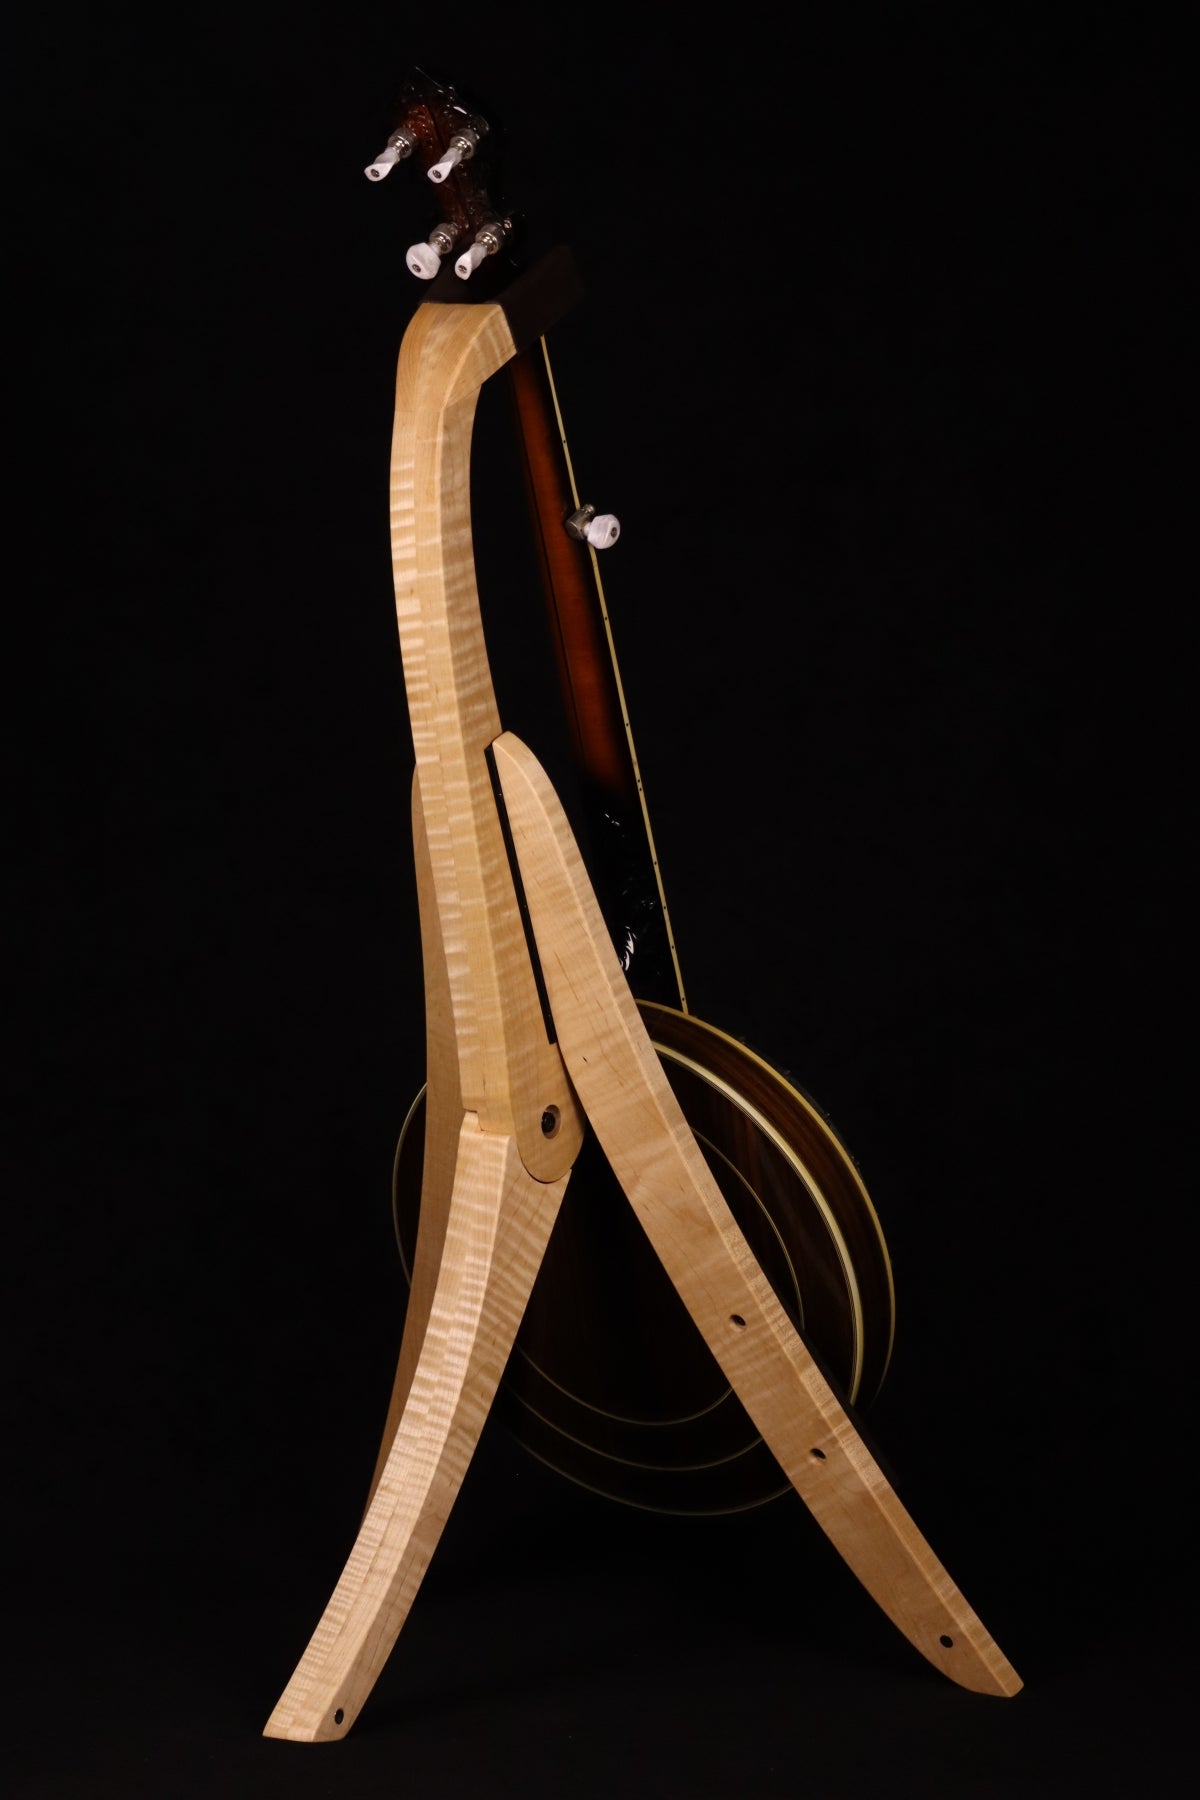 Folding curly maple wood banjo floor stand full rear image with Alvarez banjo